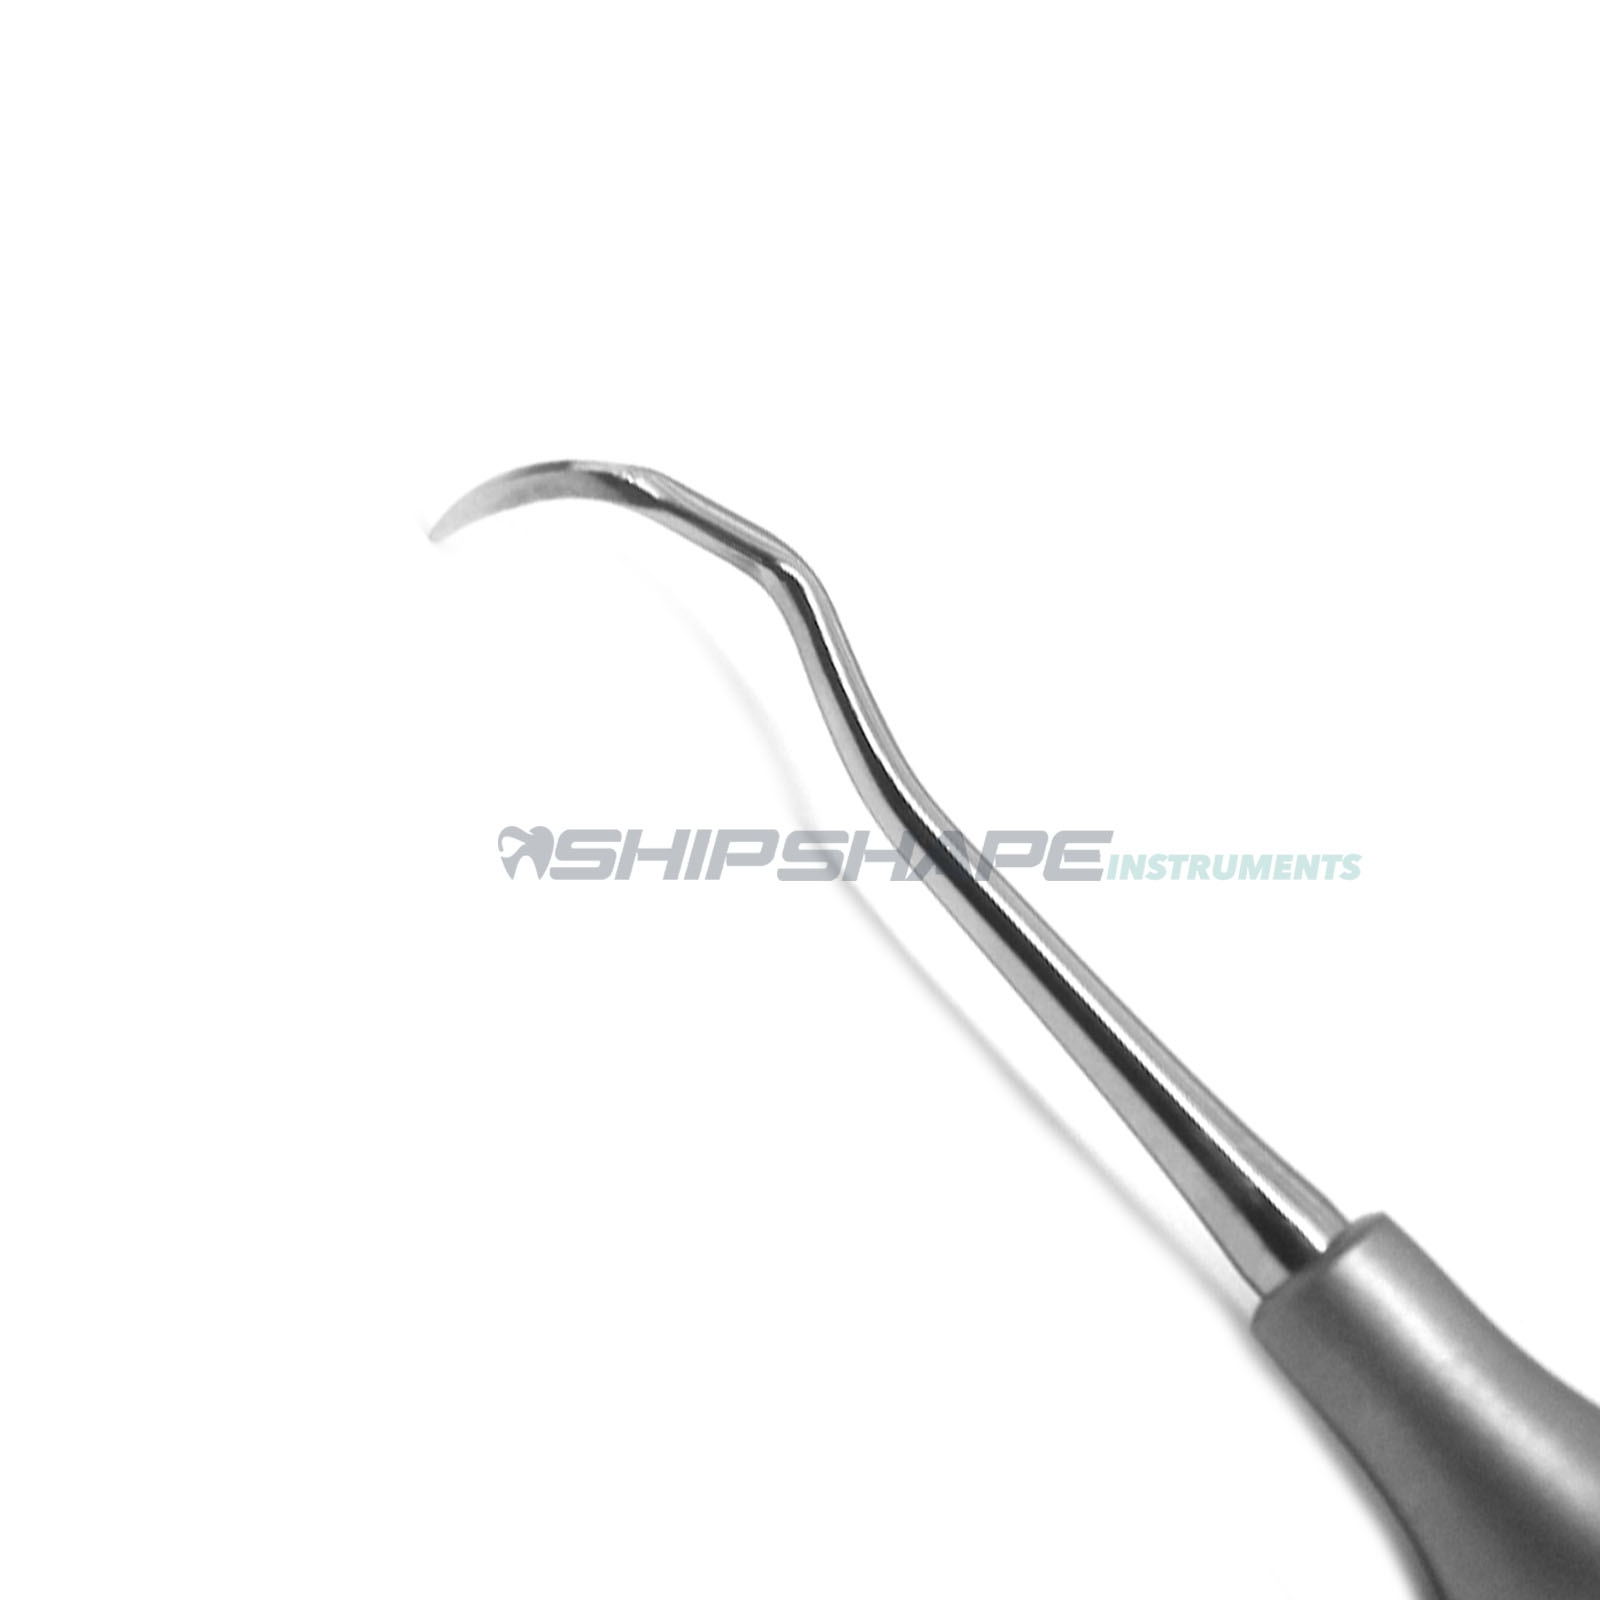 SICKLE SCALER 204s Dental Hygiene - Dent Supply Periodontics Hollow Handle Instruments-1716